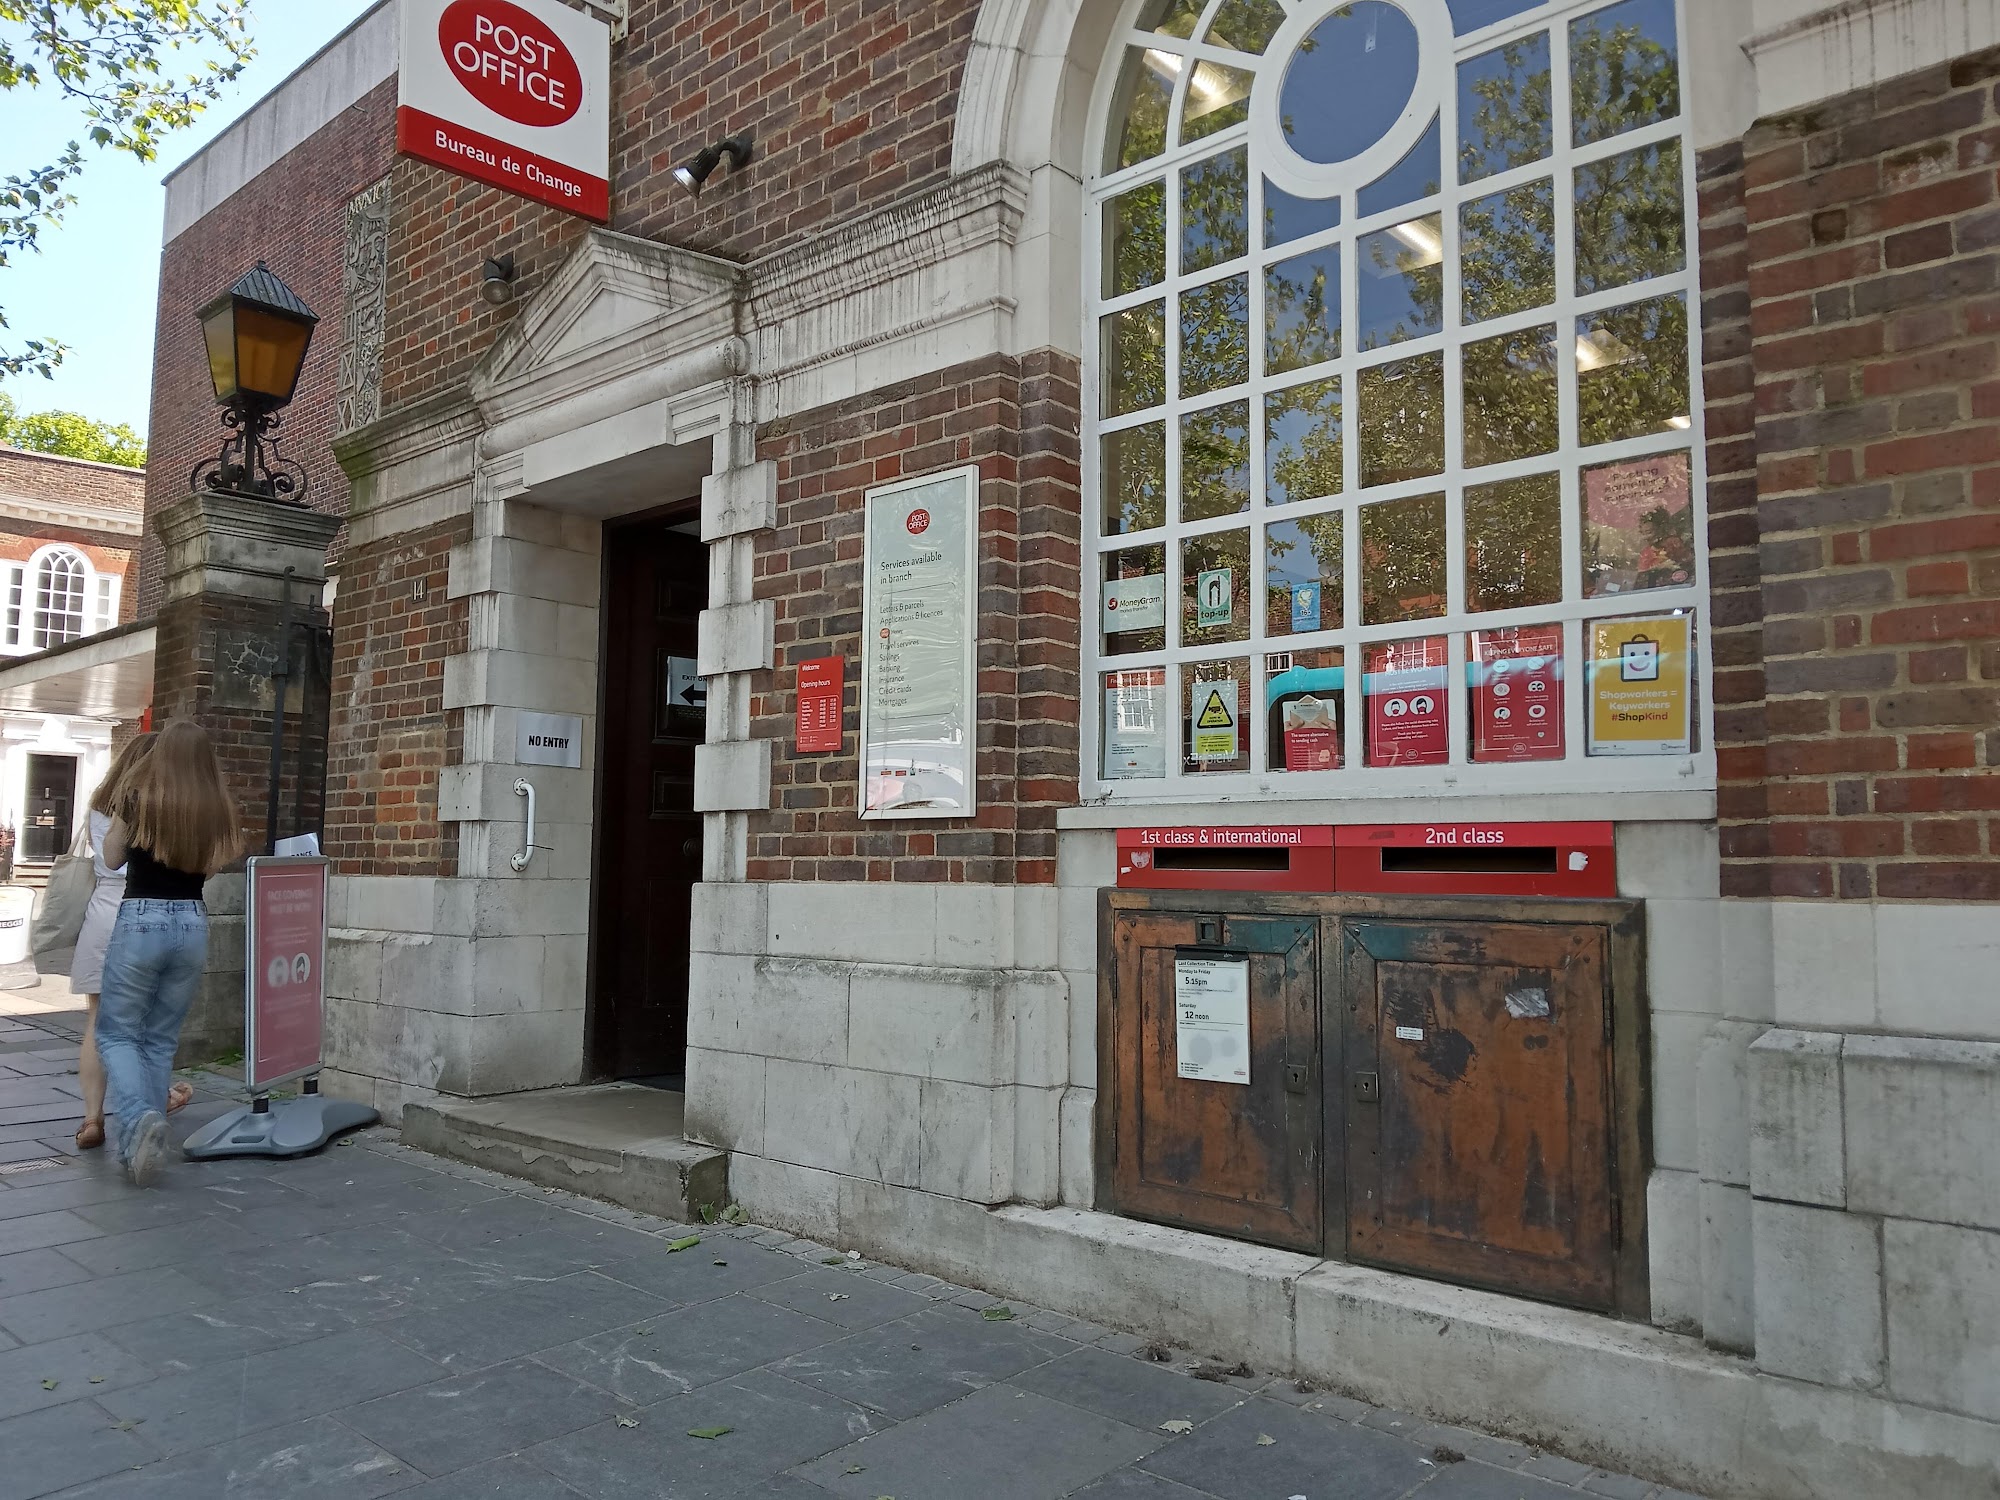 St Peter's Street Post Office